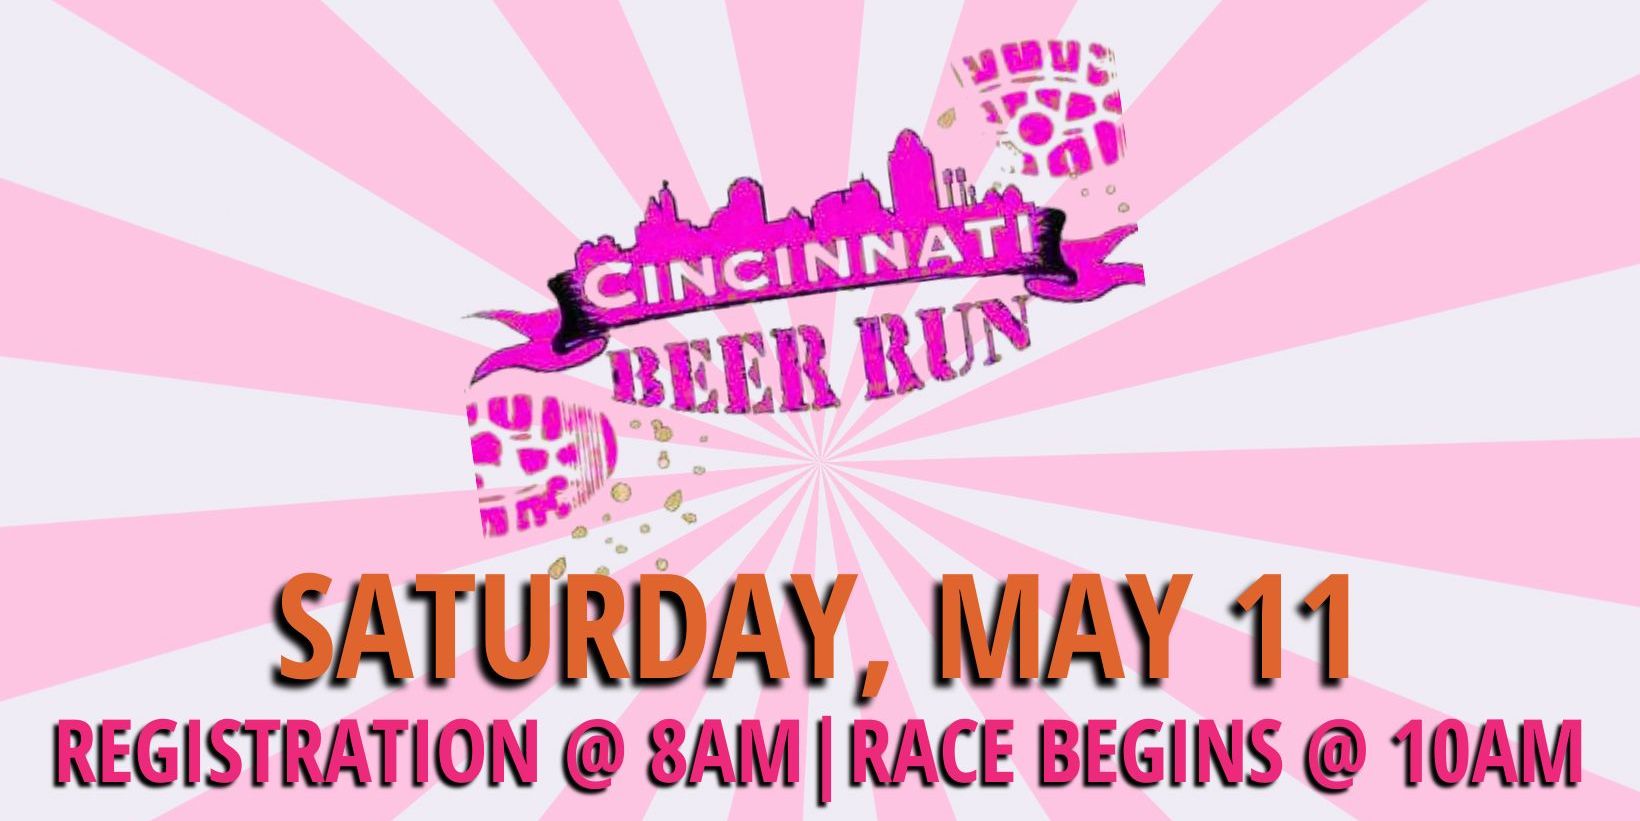 11th Annual Cincinnati Beer Run - DATE CHANGED promotional image